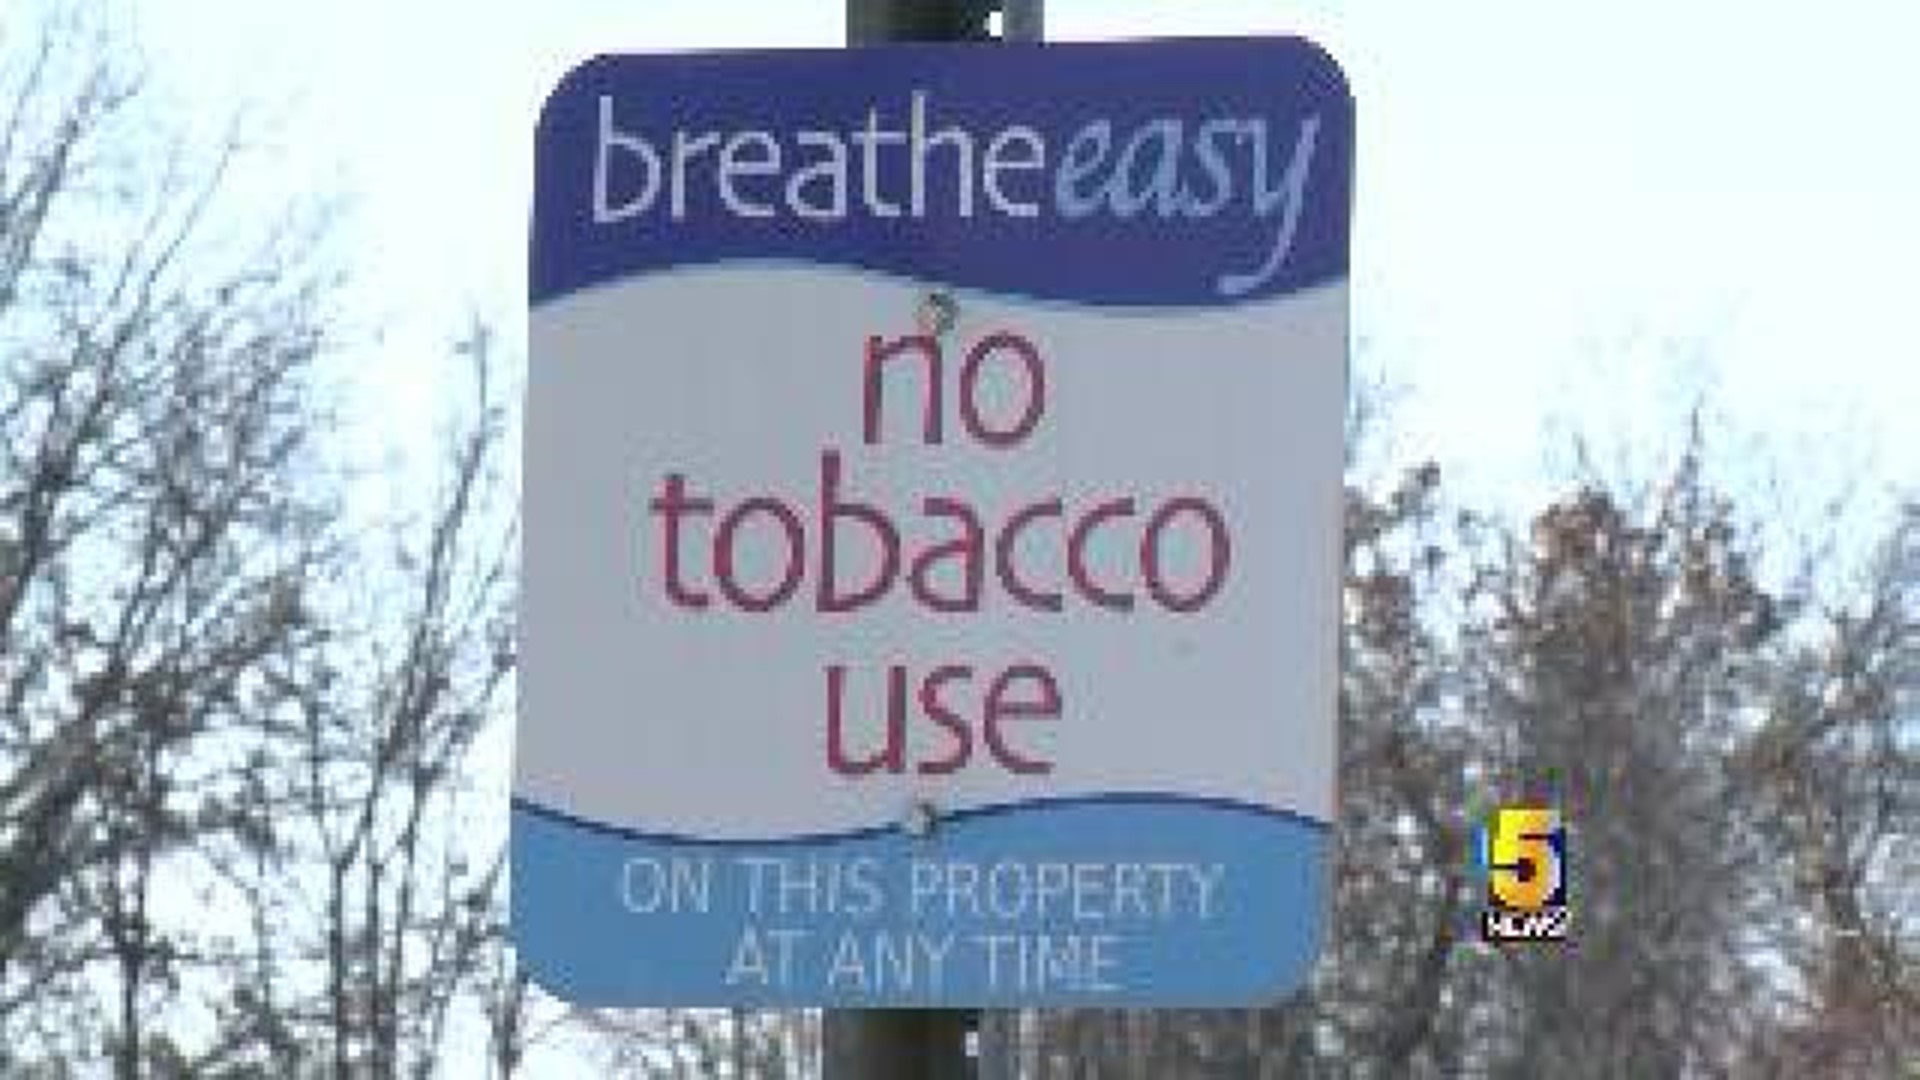 E-Cigarettes Banned on Oklahoma State Property